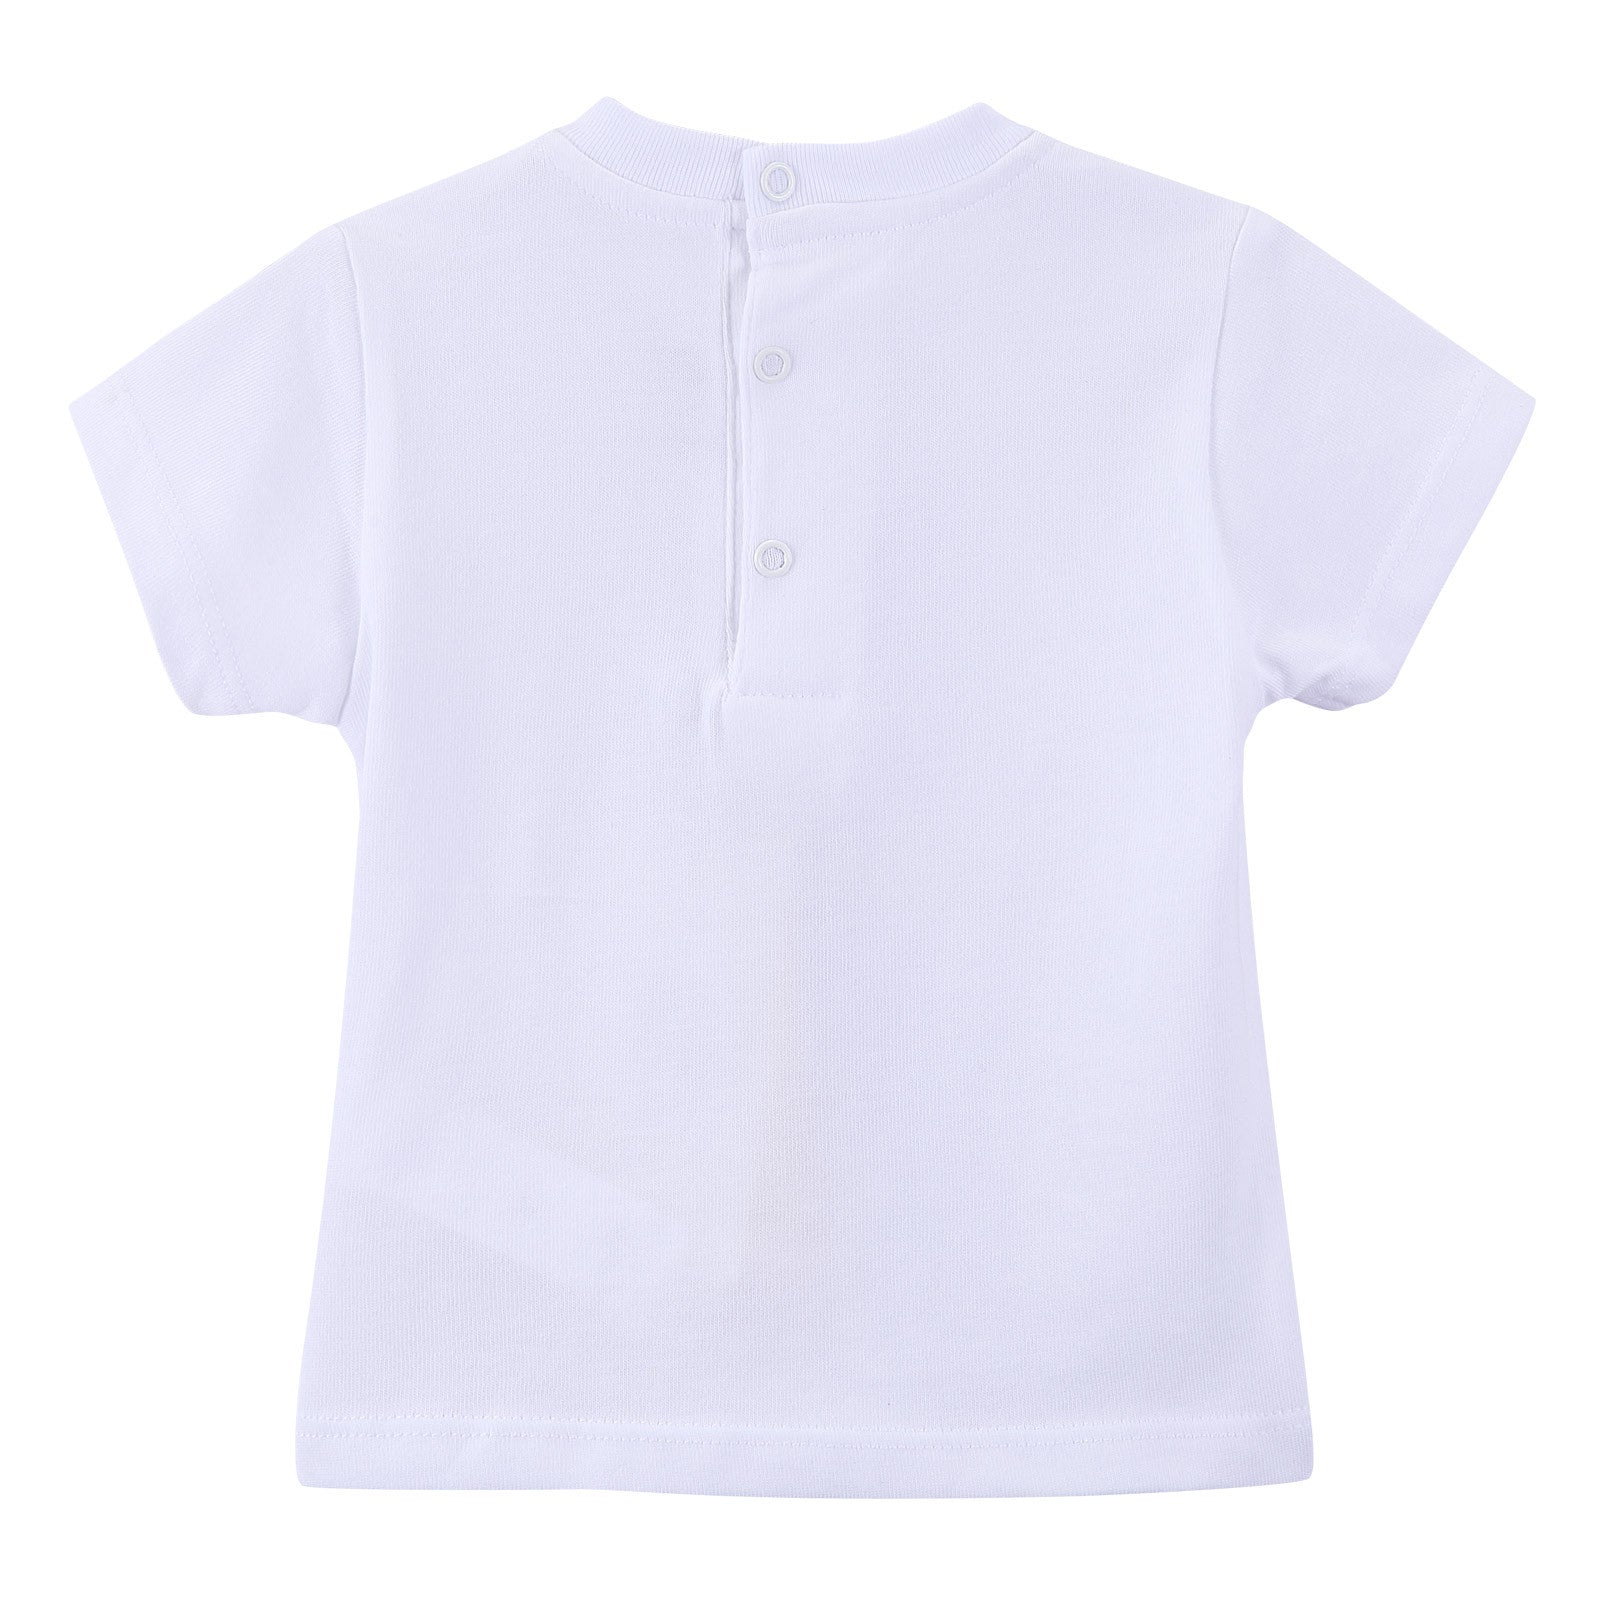 Baby Boys White Eiffel Tower Printed Cotton T-Shirt - CÉMAROSE | Children's Fashion Store - 2